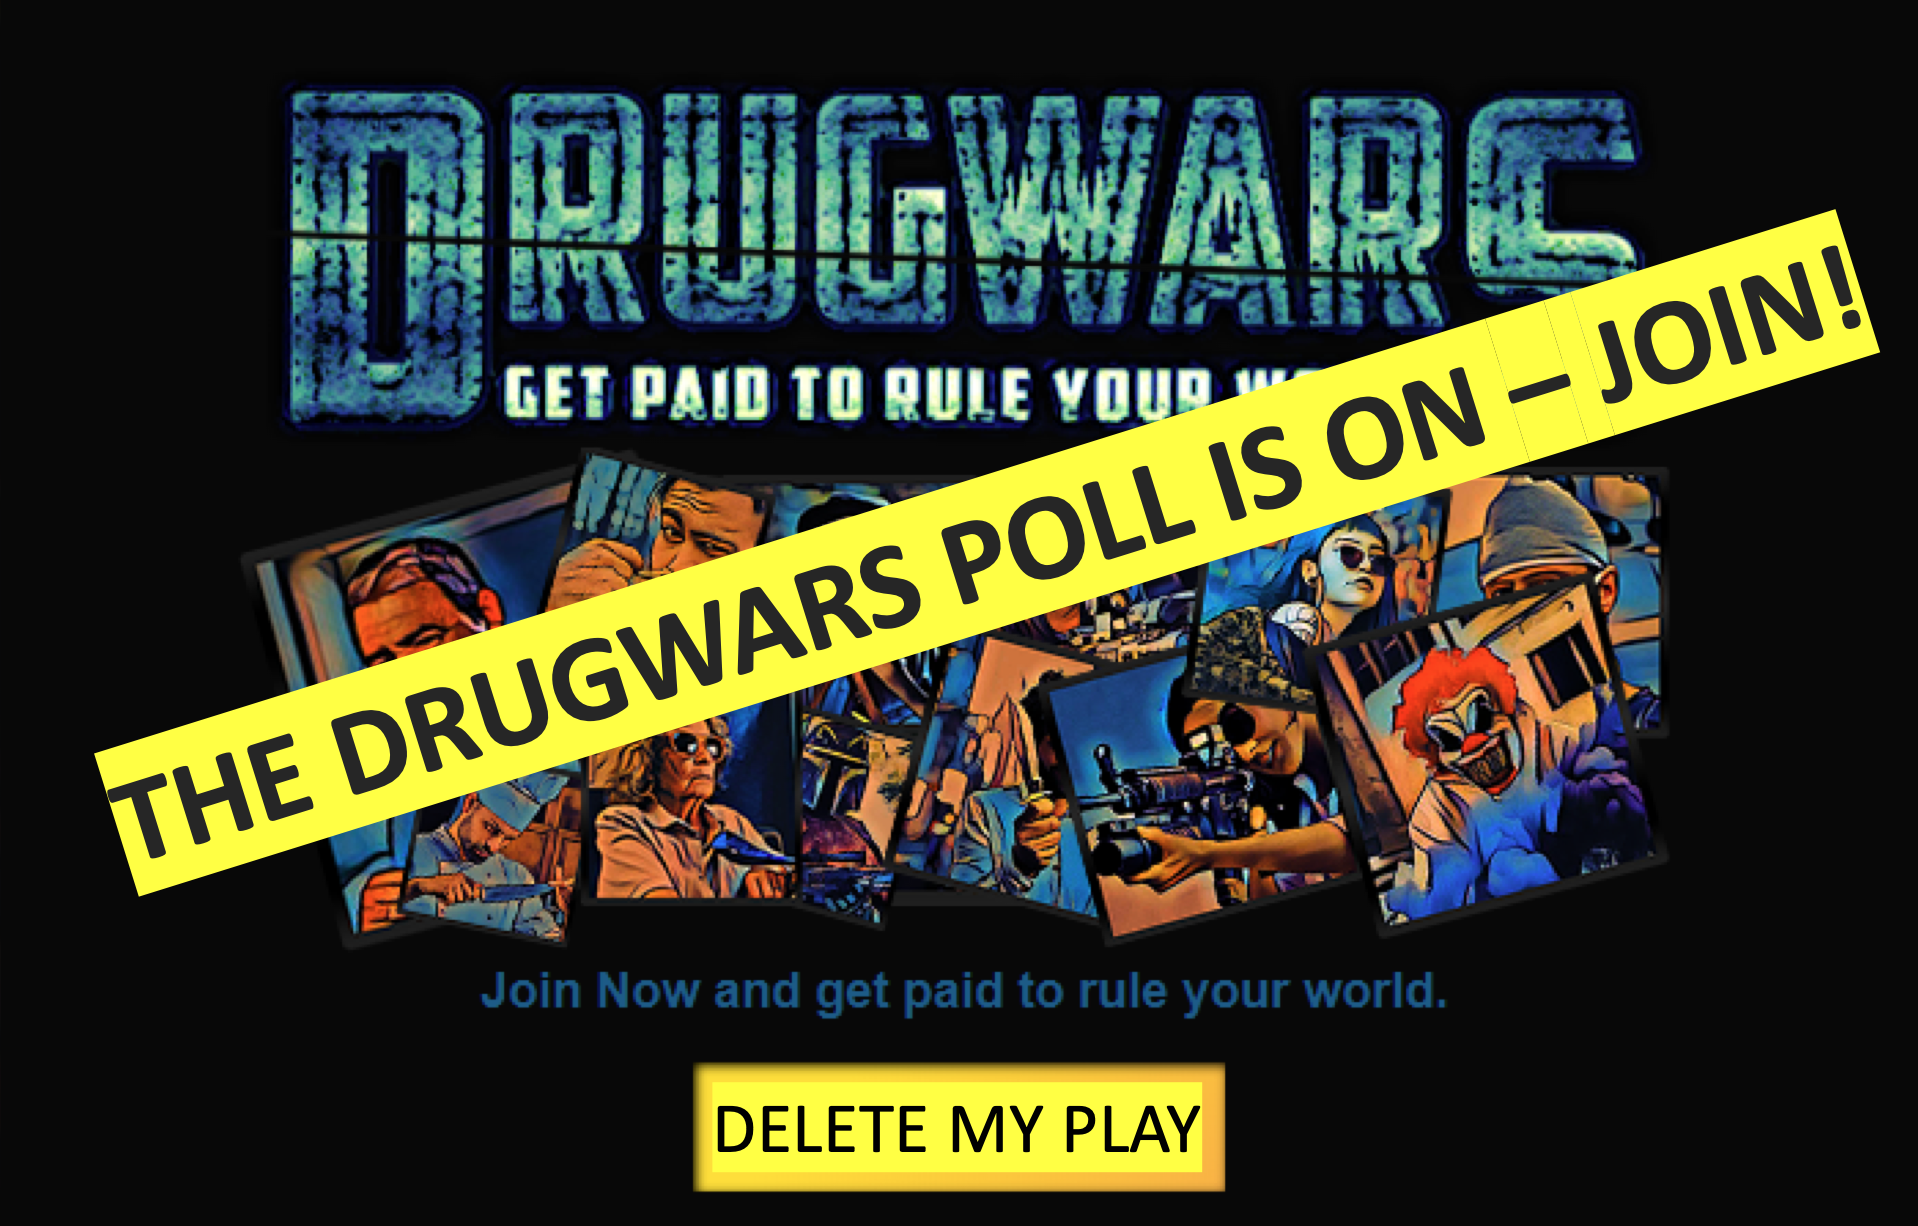 The DRUGWARS poll.png